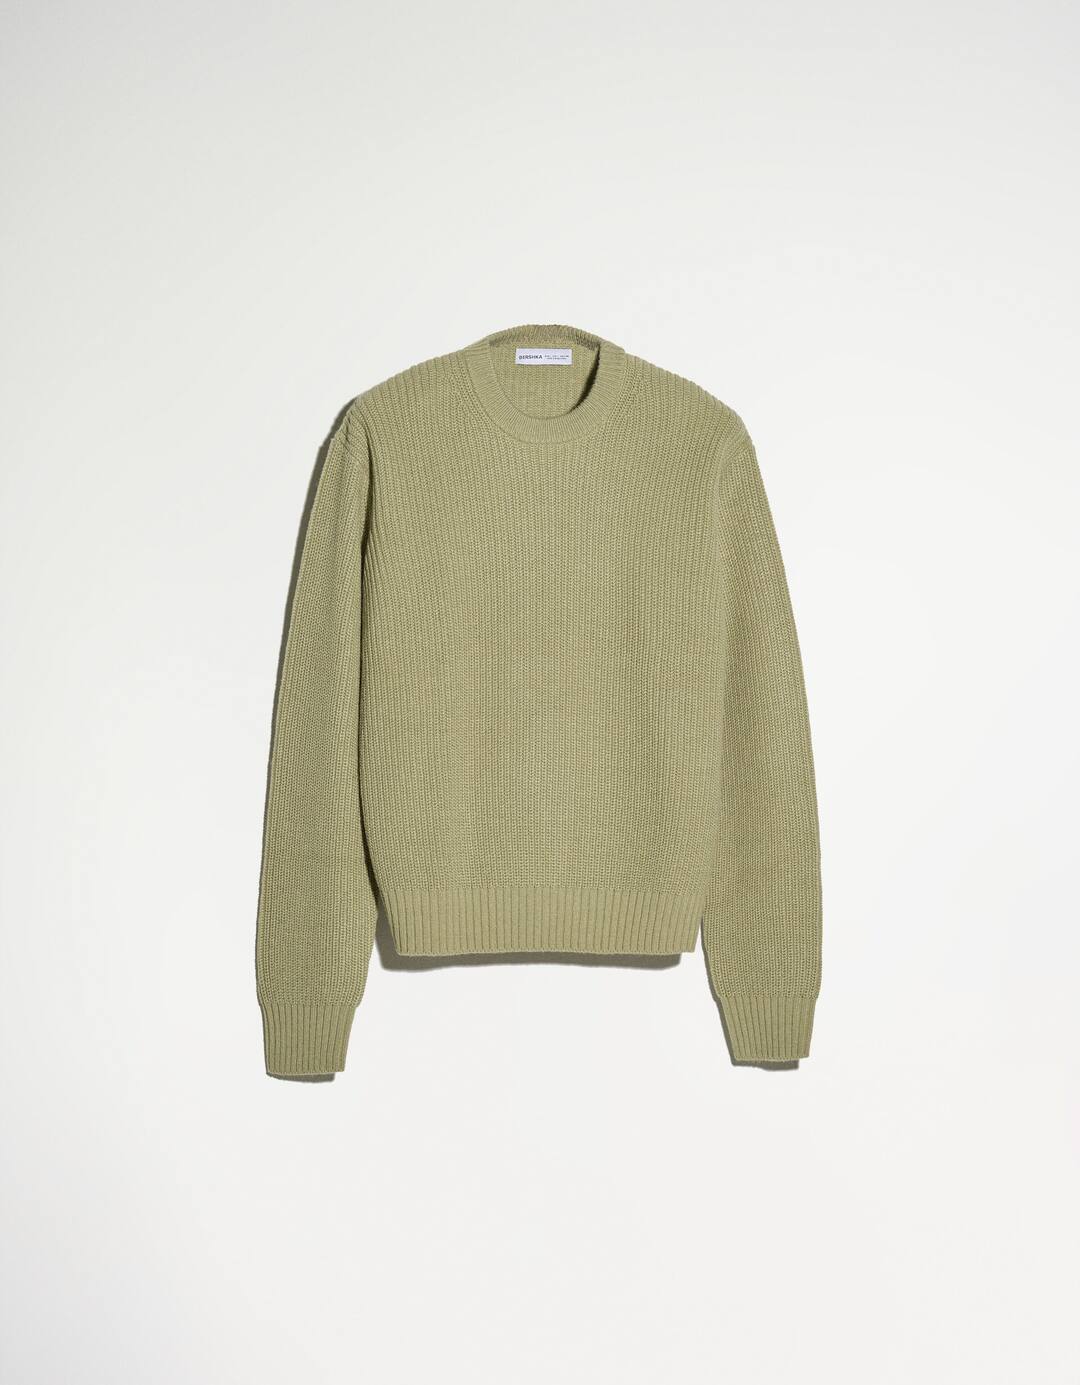 Textured crew neck wool blend sweater